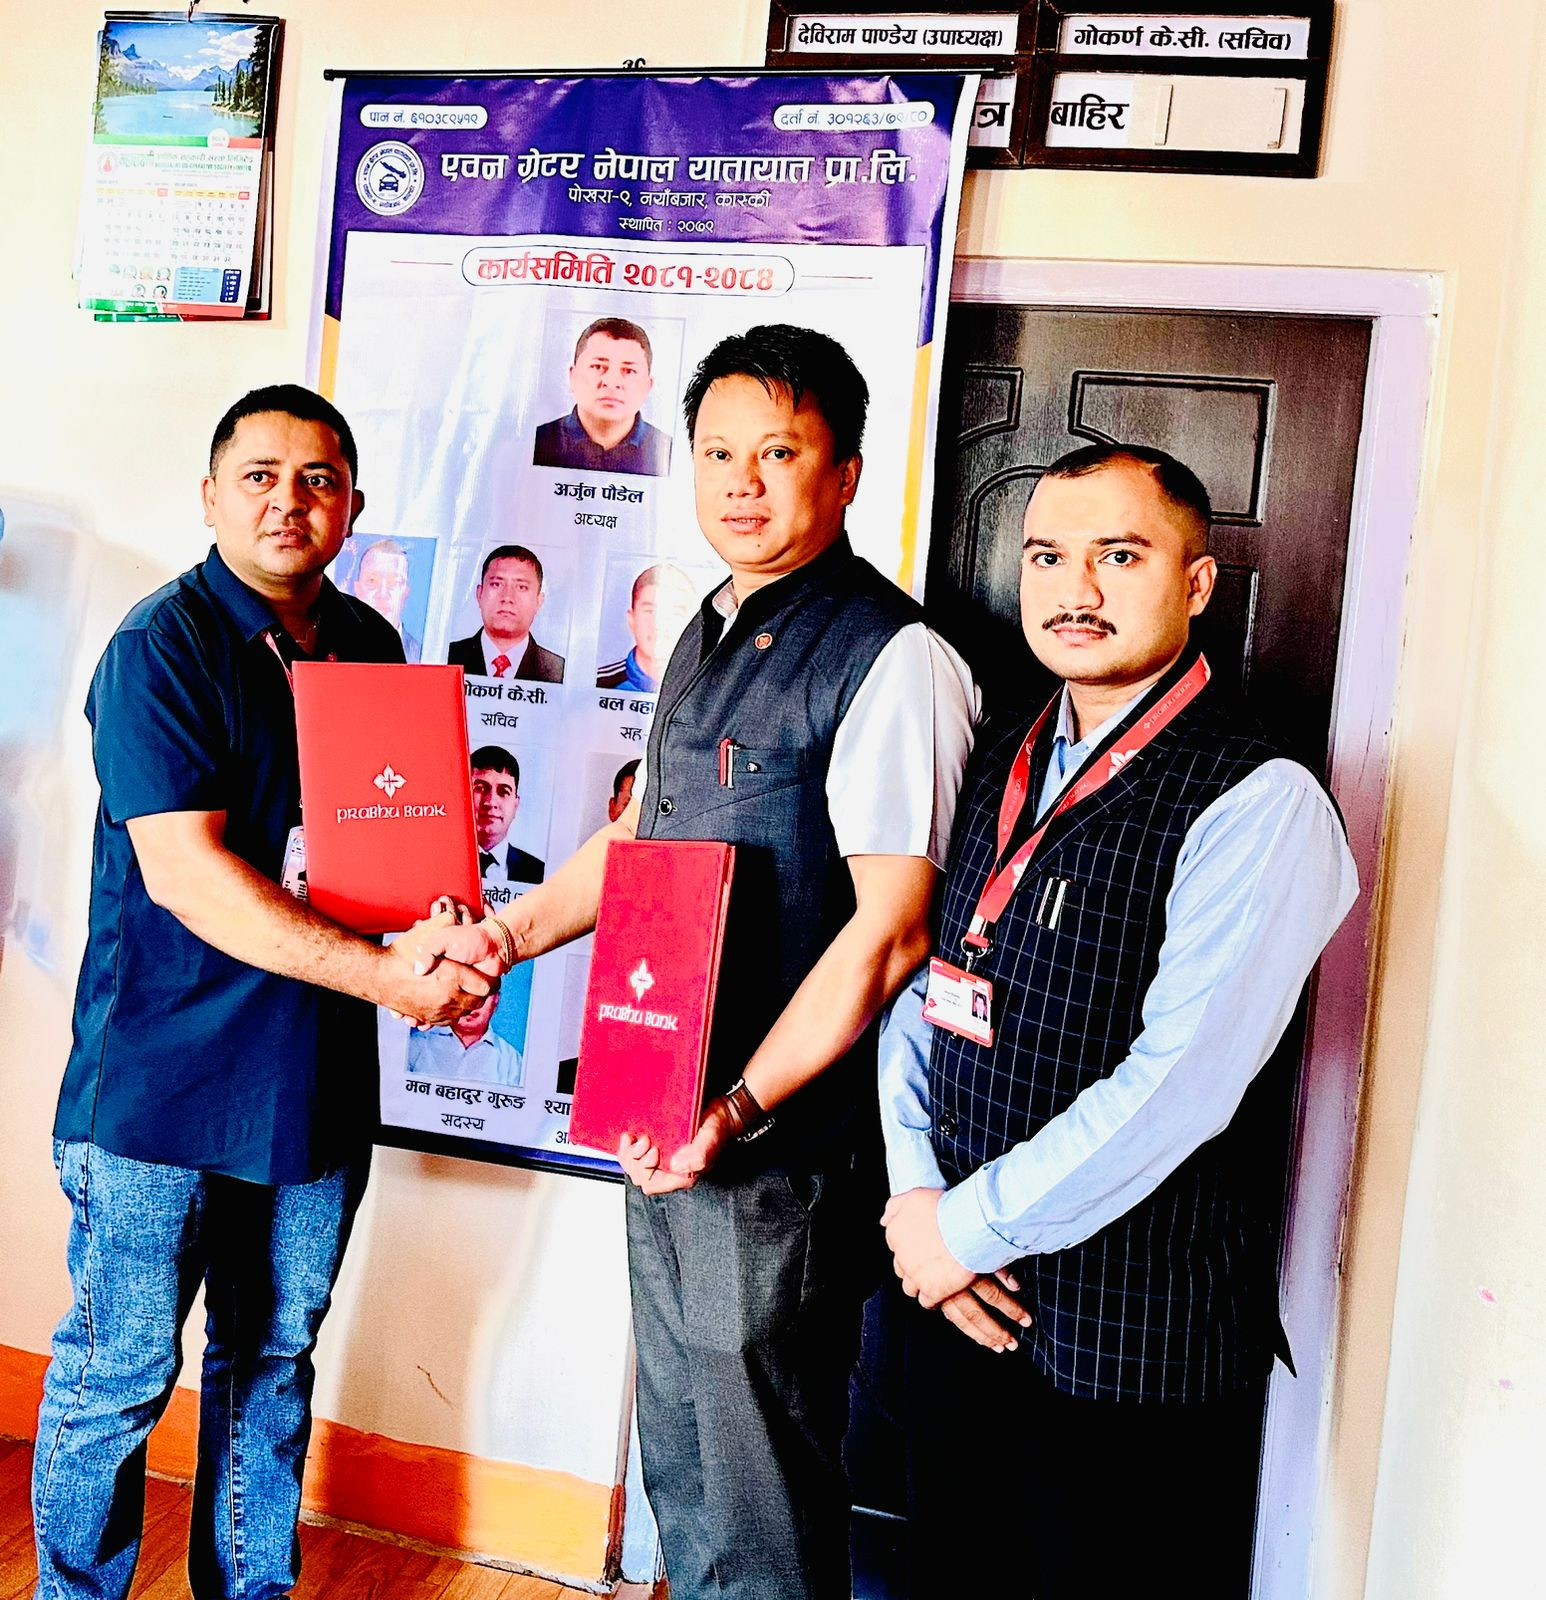 प्रभु बैंक र एवन ग्रेटर नेपाल यातायातबीच नगदरहित भुक्तानी प्रणालीमा सहकार्य